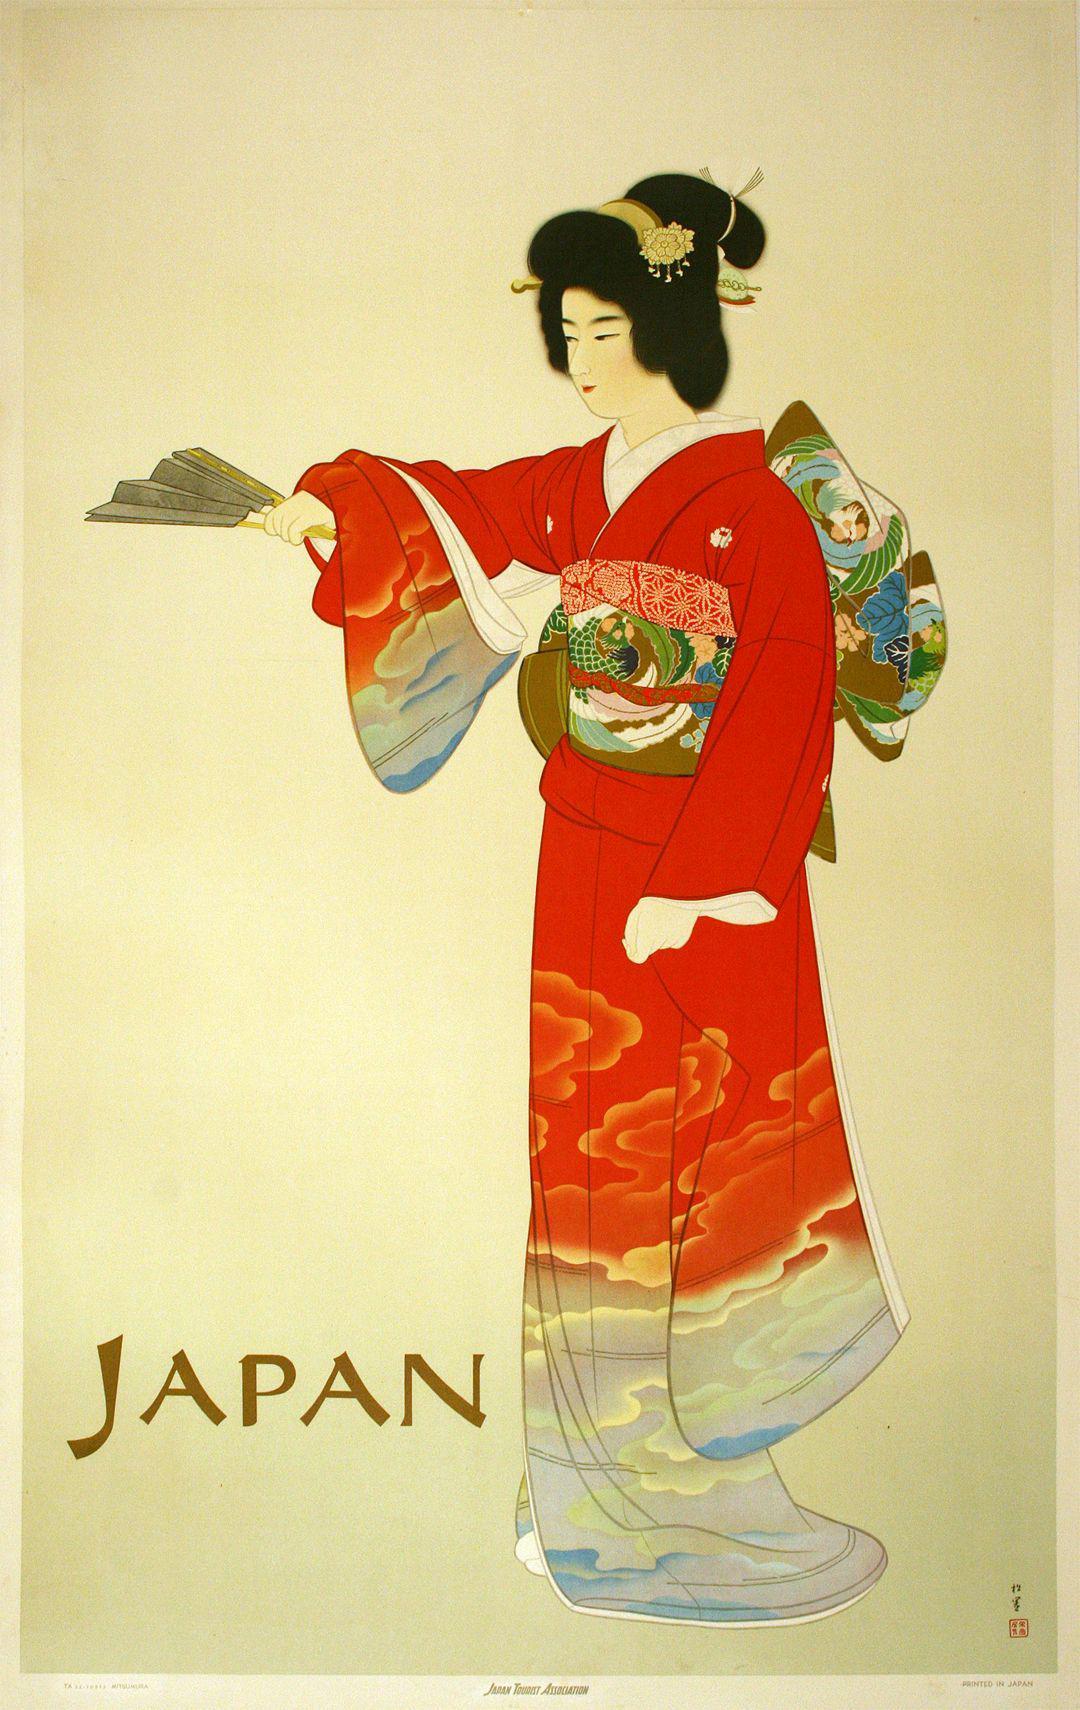 Original Japan Woman in Kimono Poster c1960 by Uemura Shoen